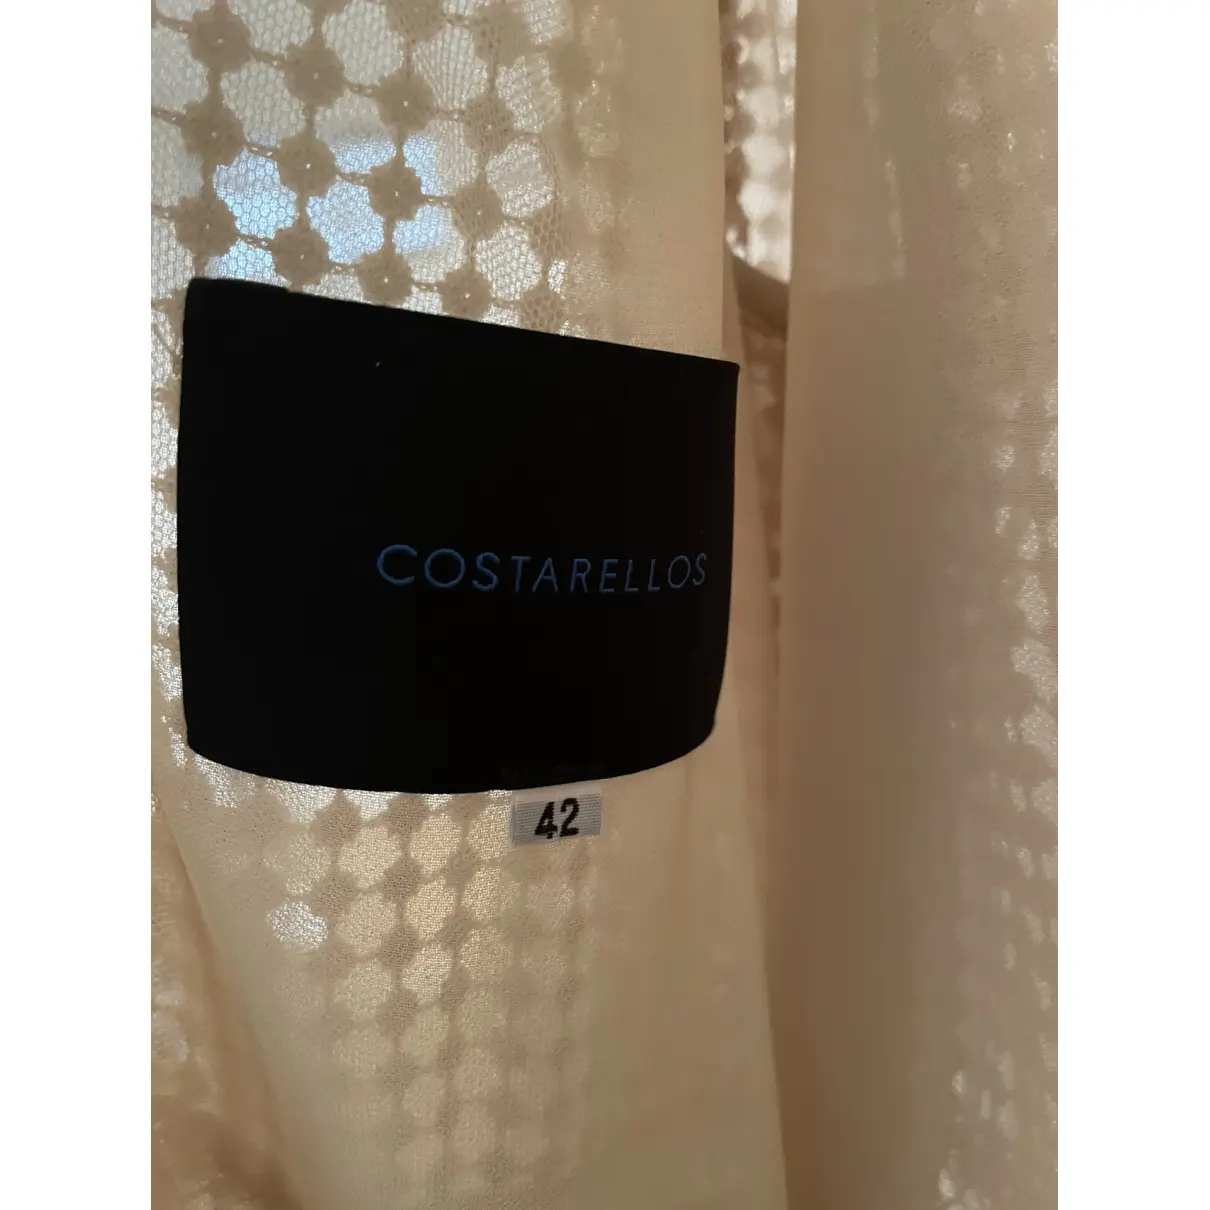 Buy Costarellos Lace maxi dress online